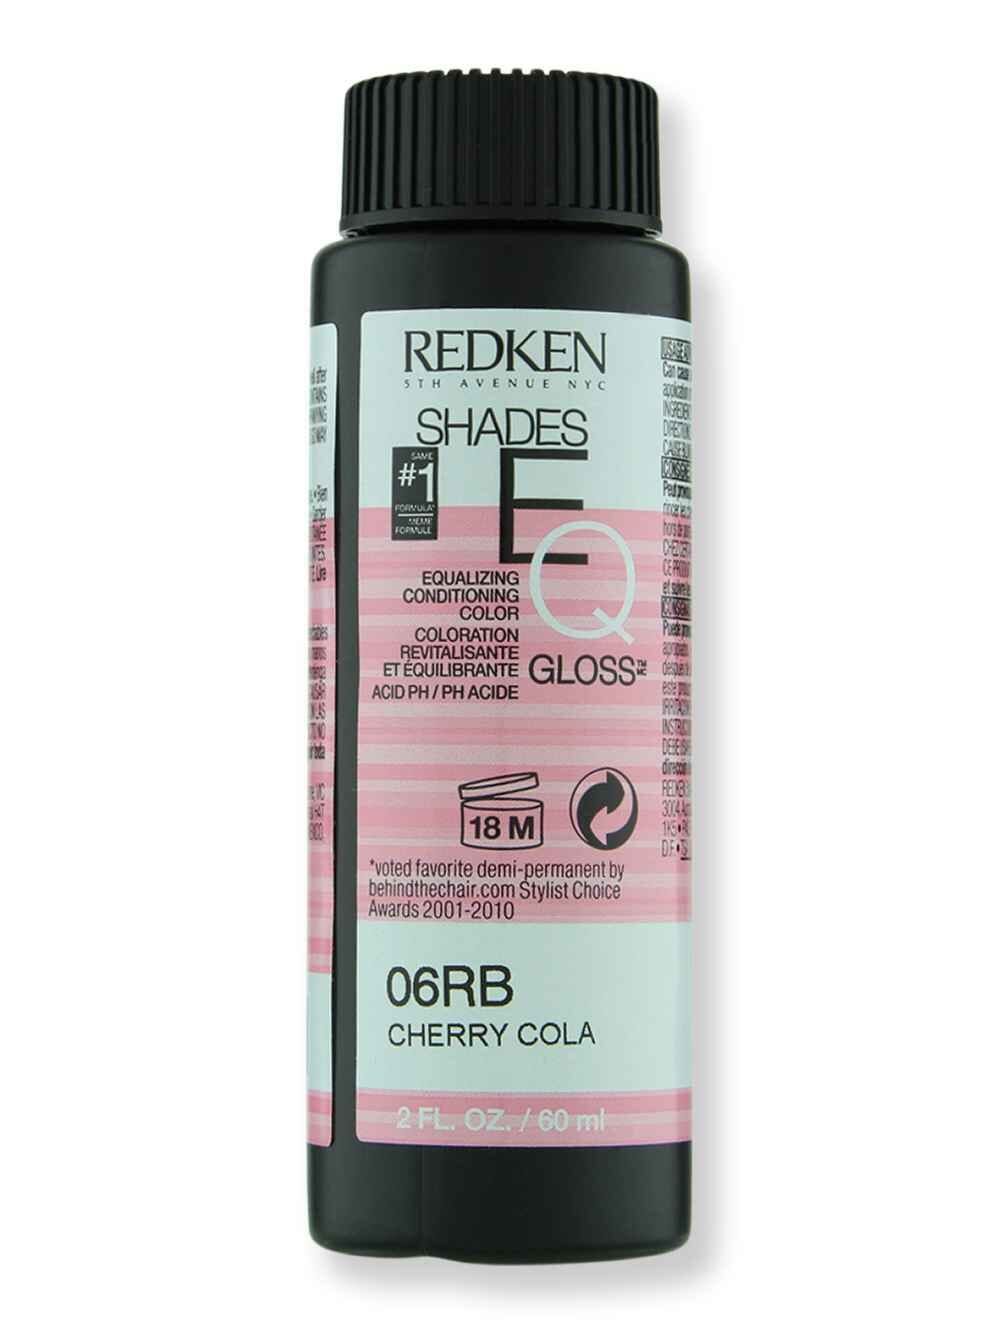 Redken Redken Shades EQ Gloss 2 oz60 ml06RB Cherry Cola Hair Color 